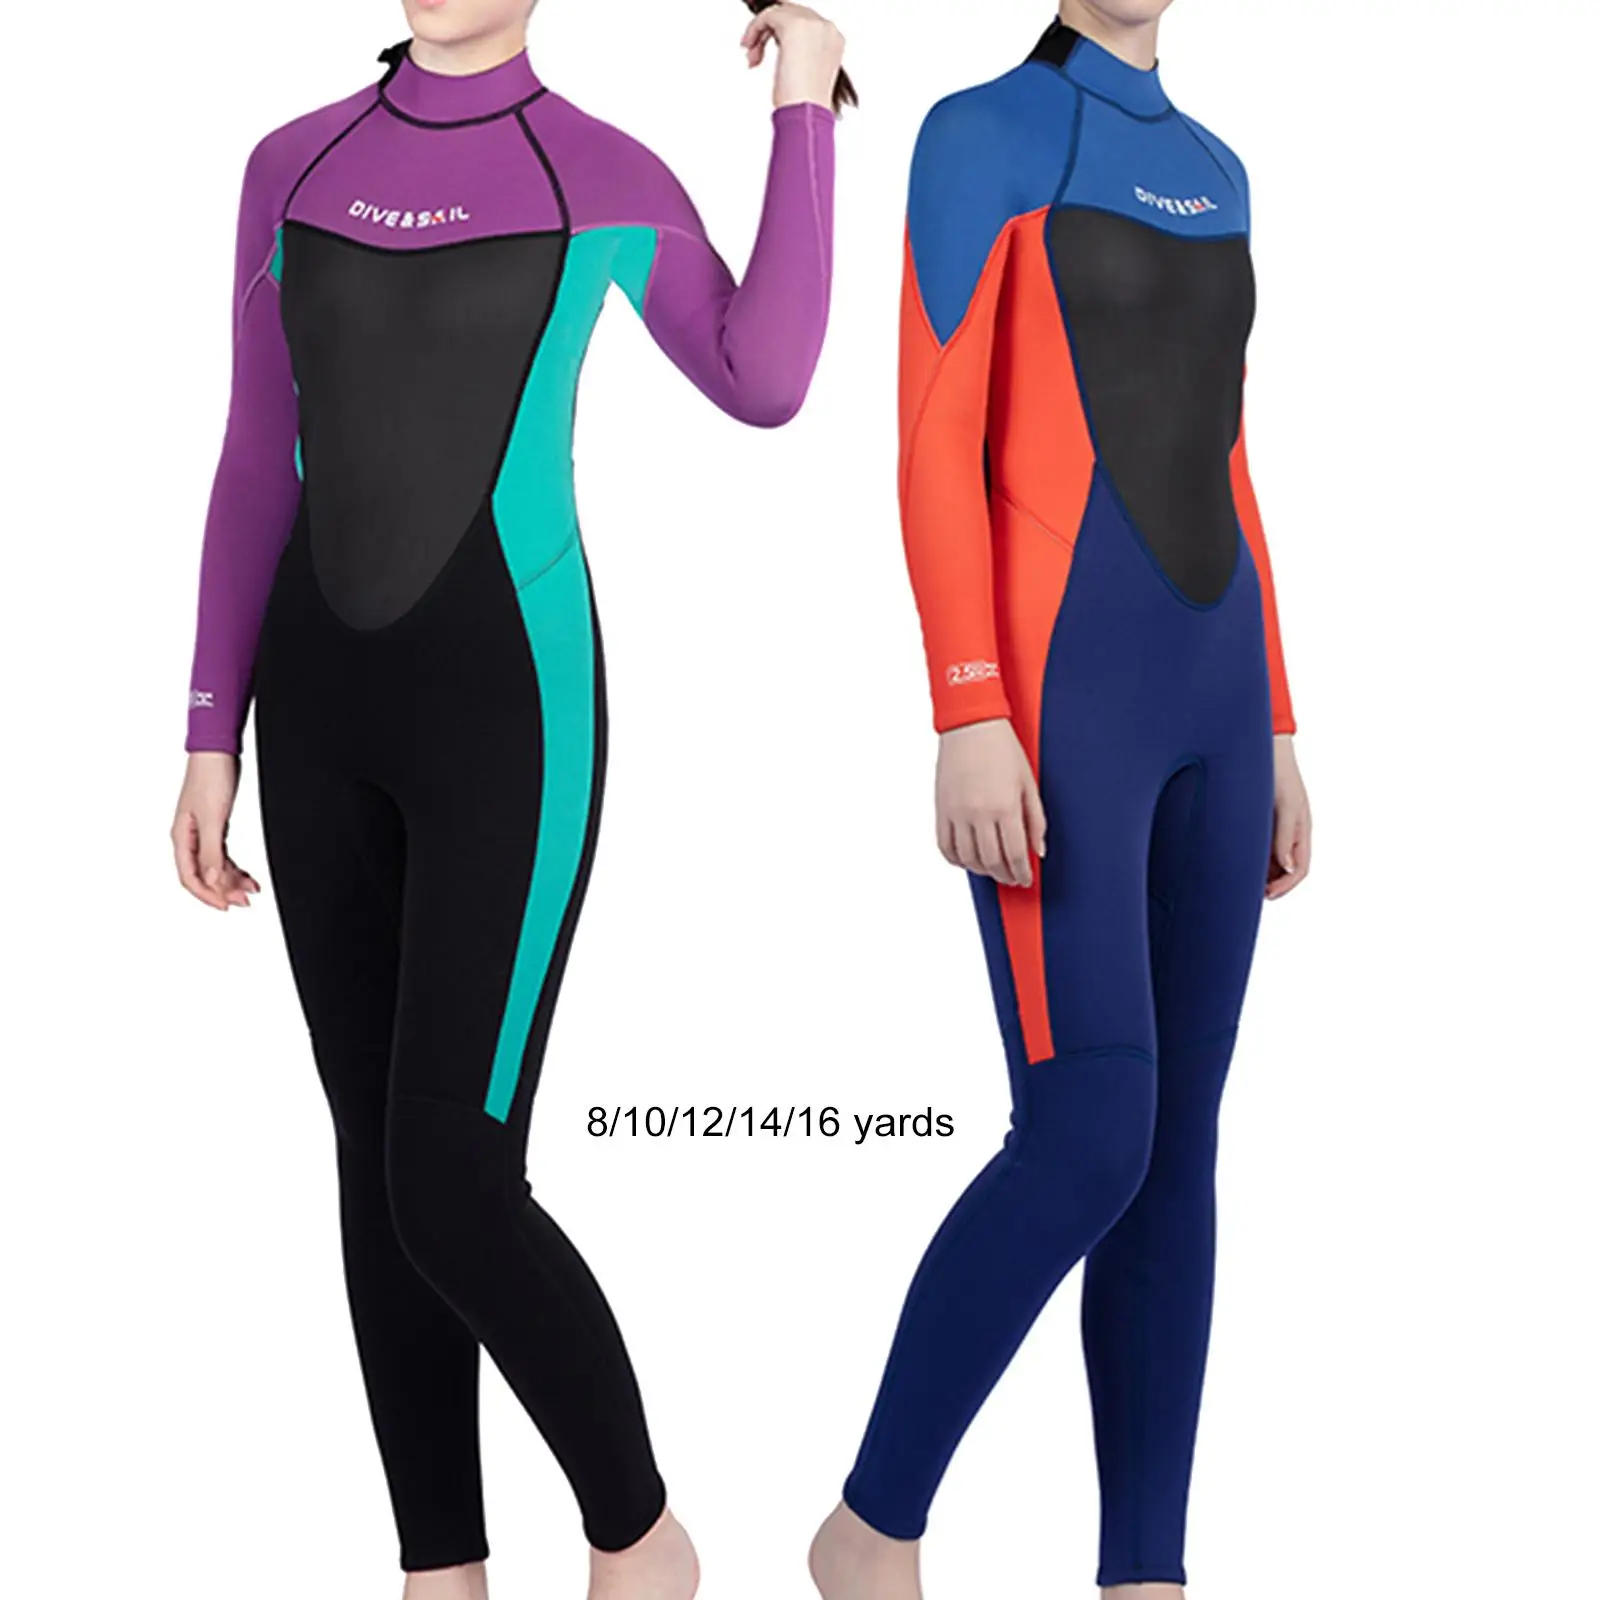 Kids Wetsuit 2.5mm Neoprene Thermal Fullsuit for Snorkeling Kayaking Surfing